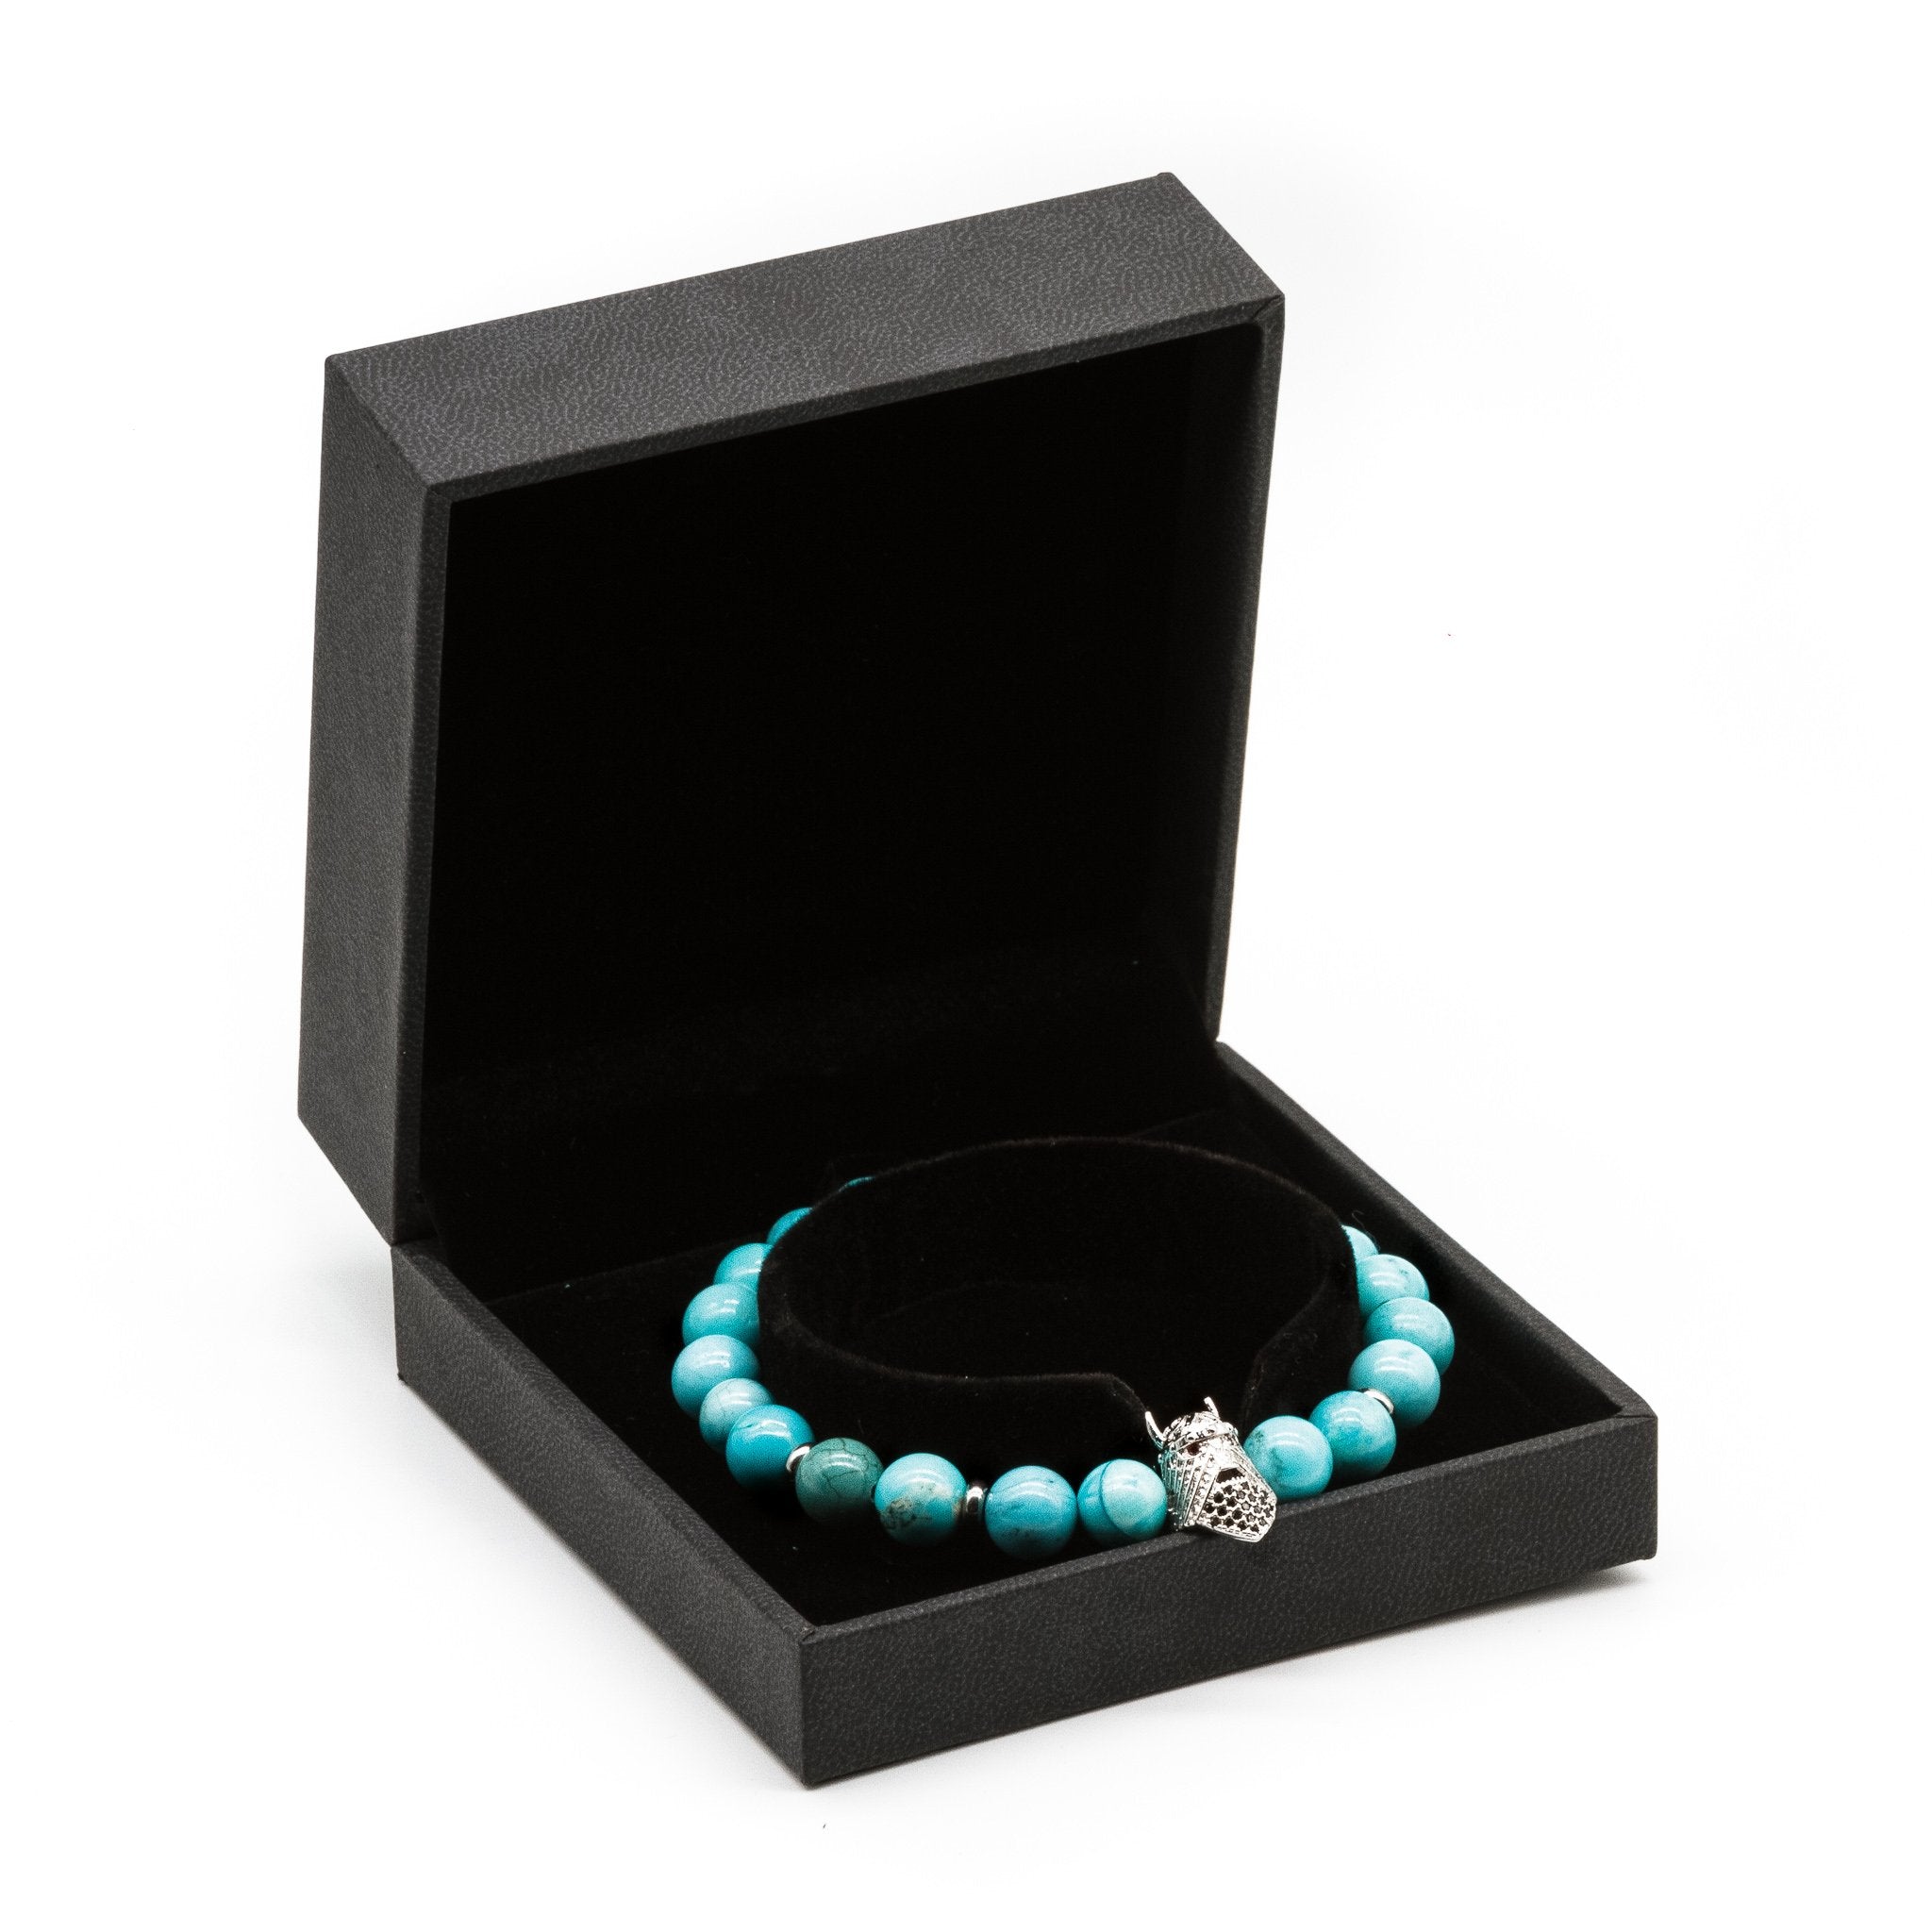 UNCOMMON Men's Beads Bracelet One Silver Jeweled Warrior Charm Turquoise Jasper Beads